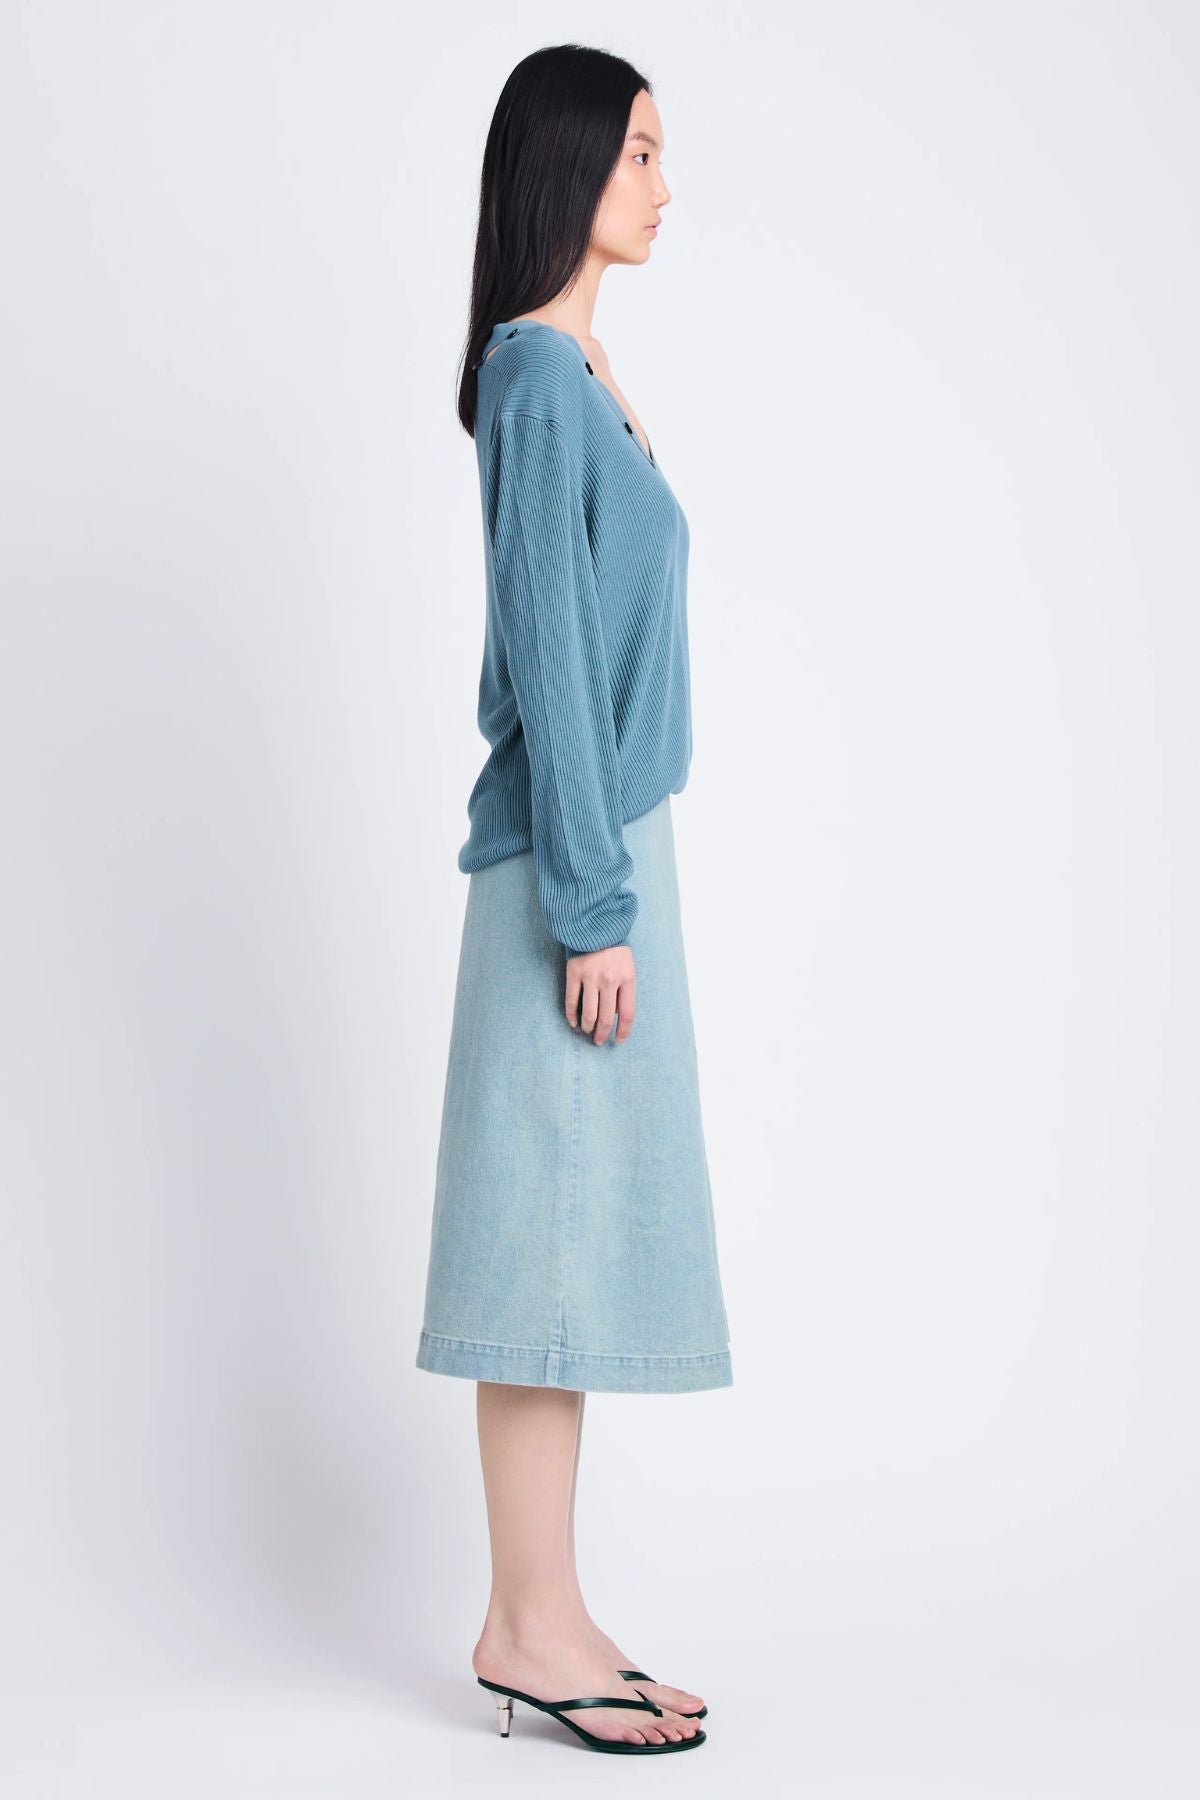 Proenza Schouler White Label Iris Wrap Skirt - Grey Indigo